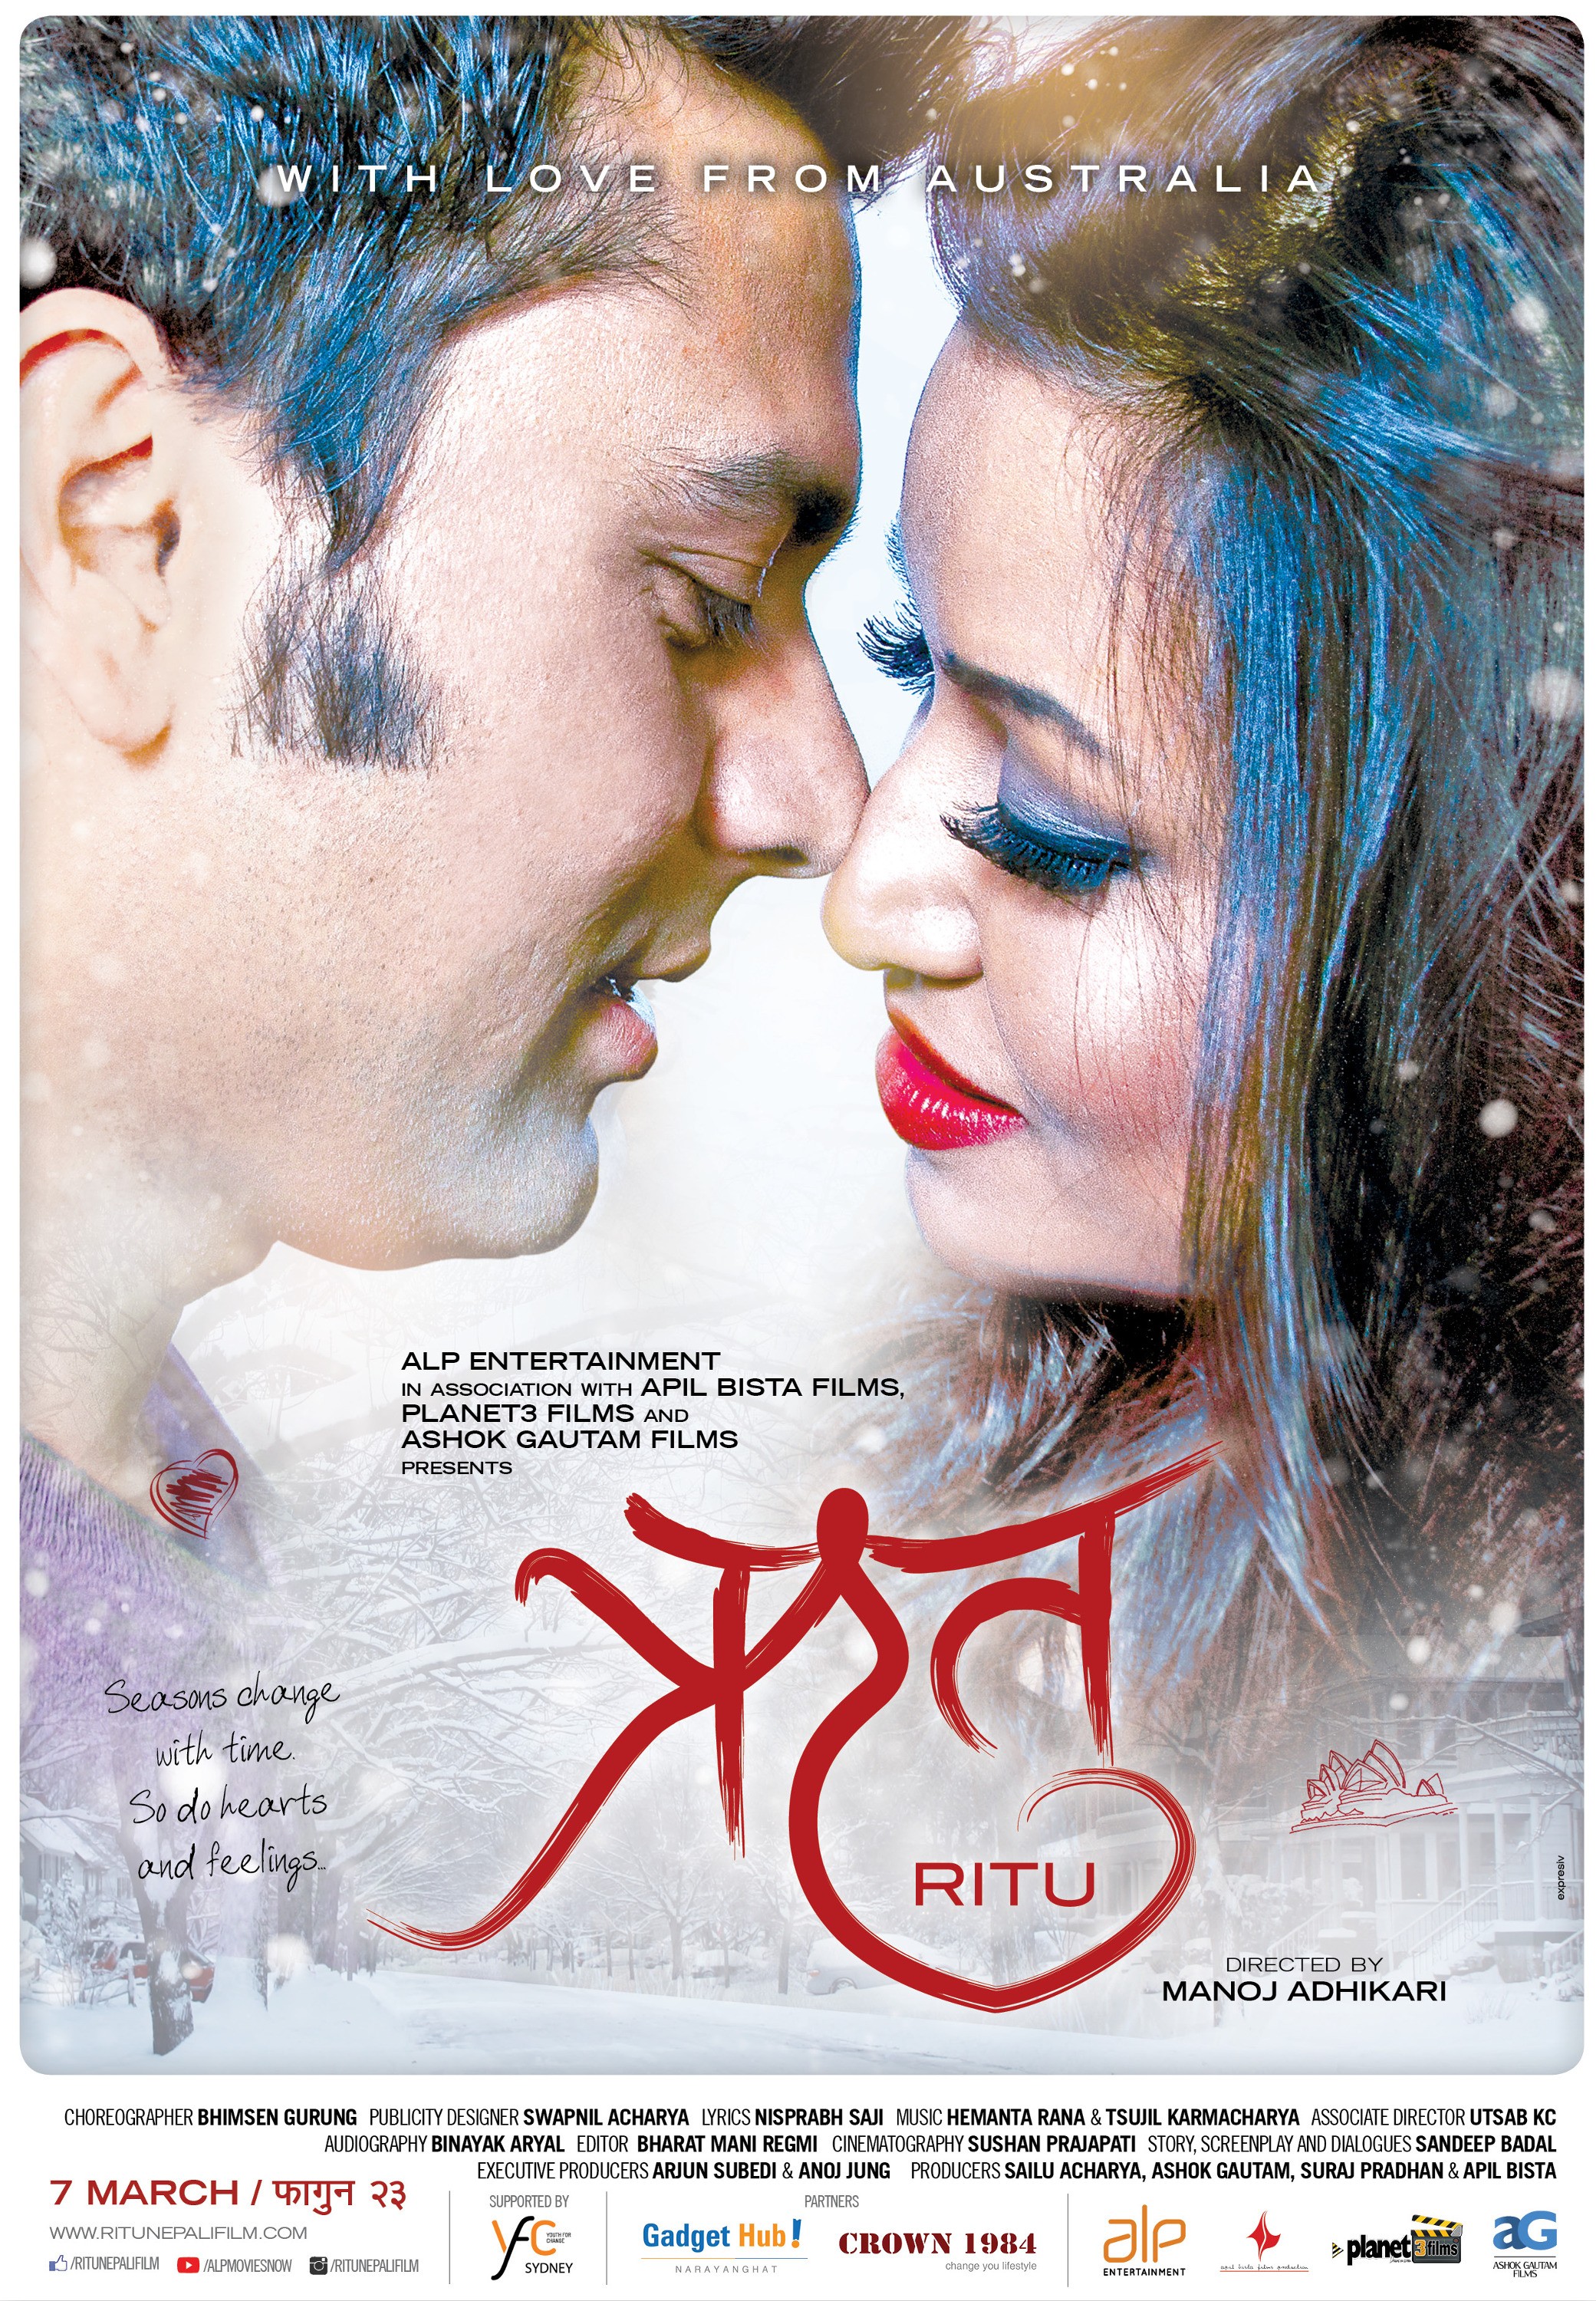 Mega Sized Movie Poster Image for Ritu (#2 of 3)